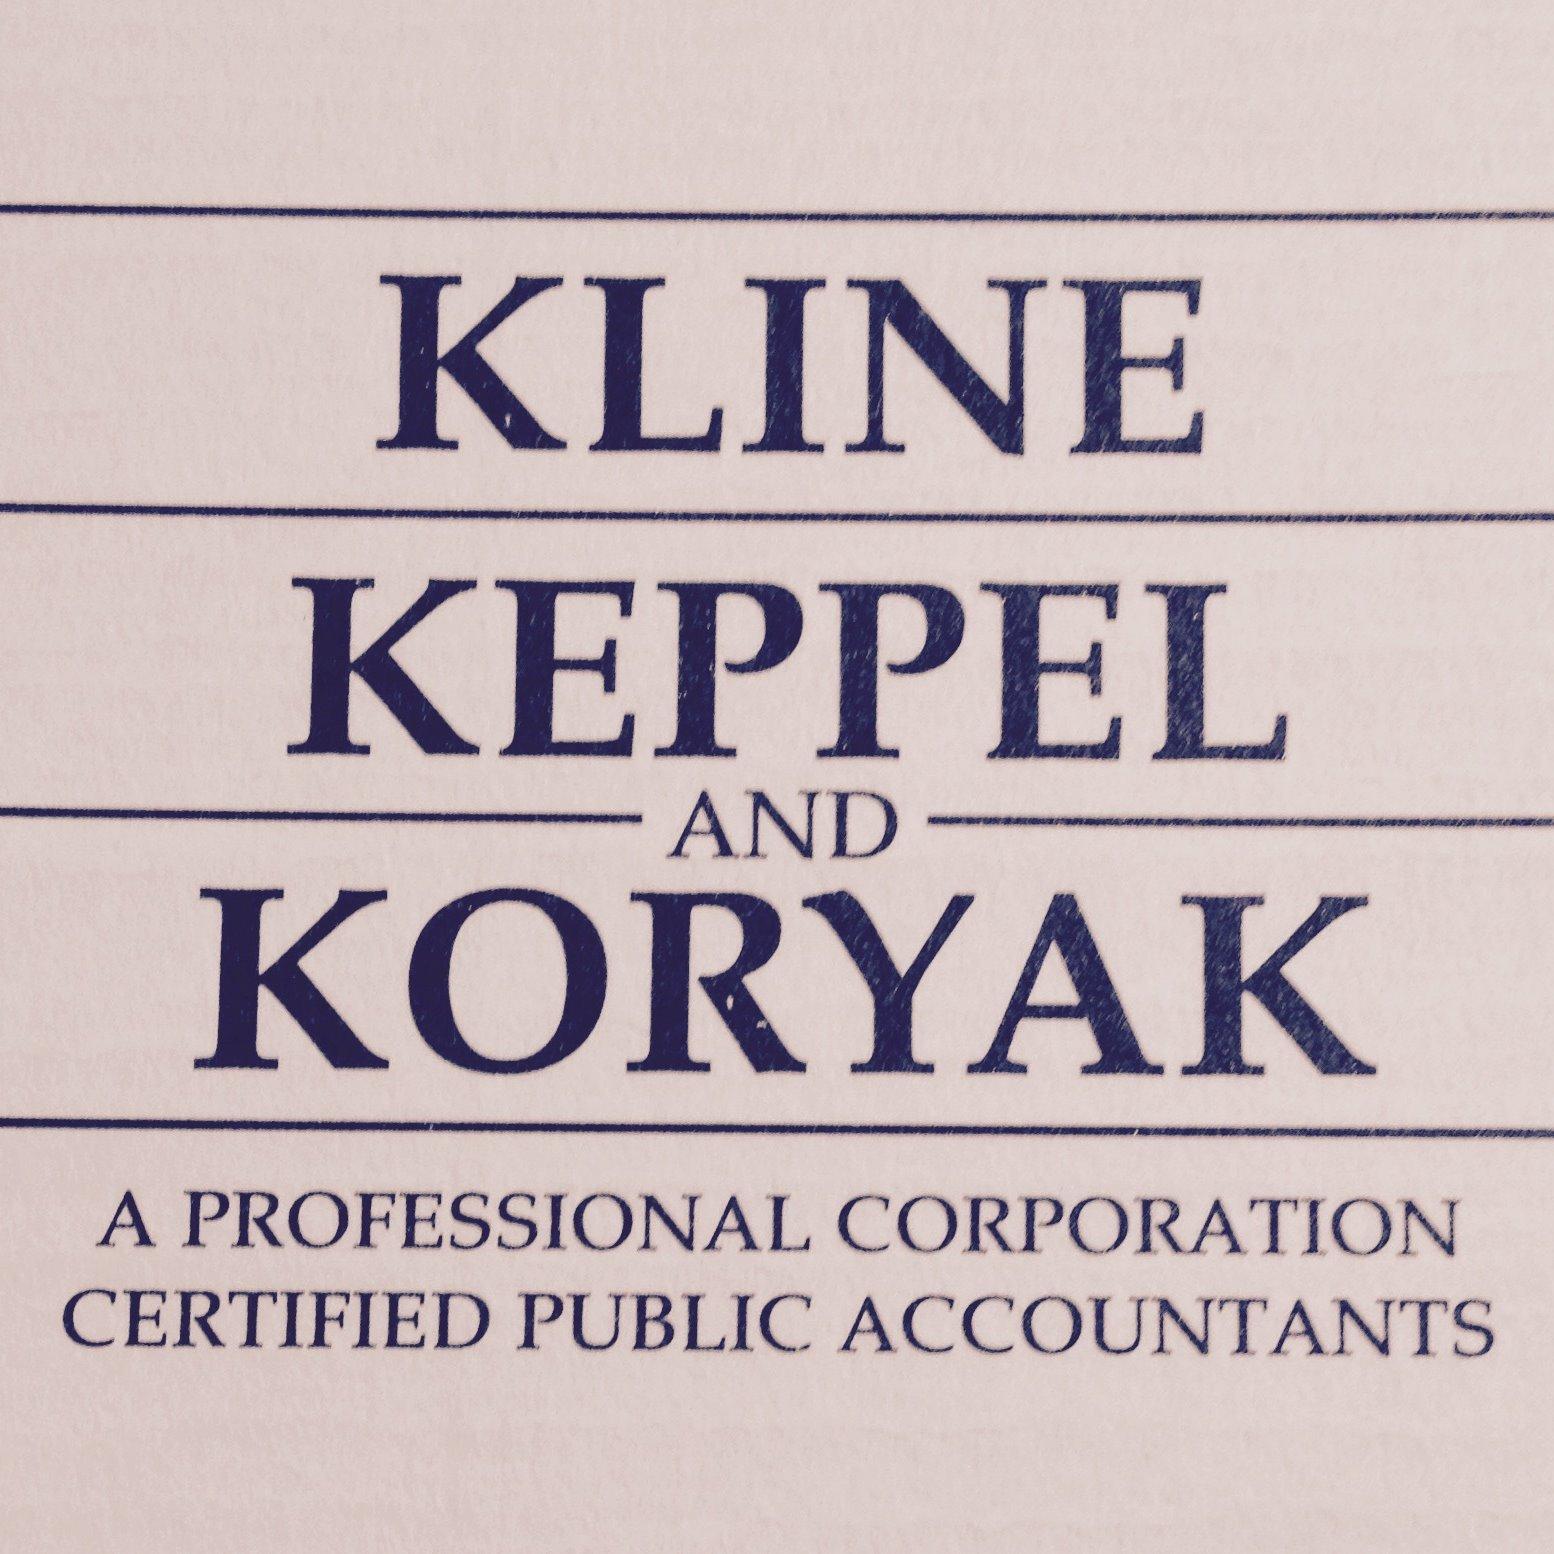 Kline Keppel And Koryak Logo